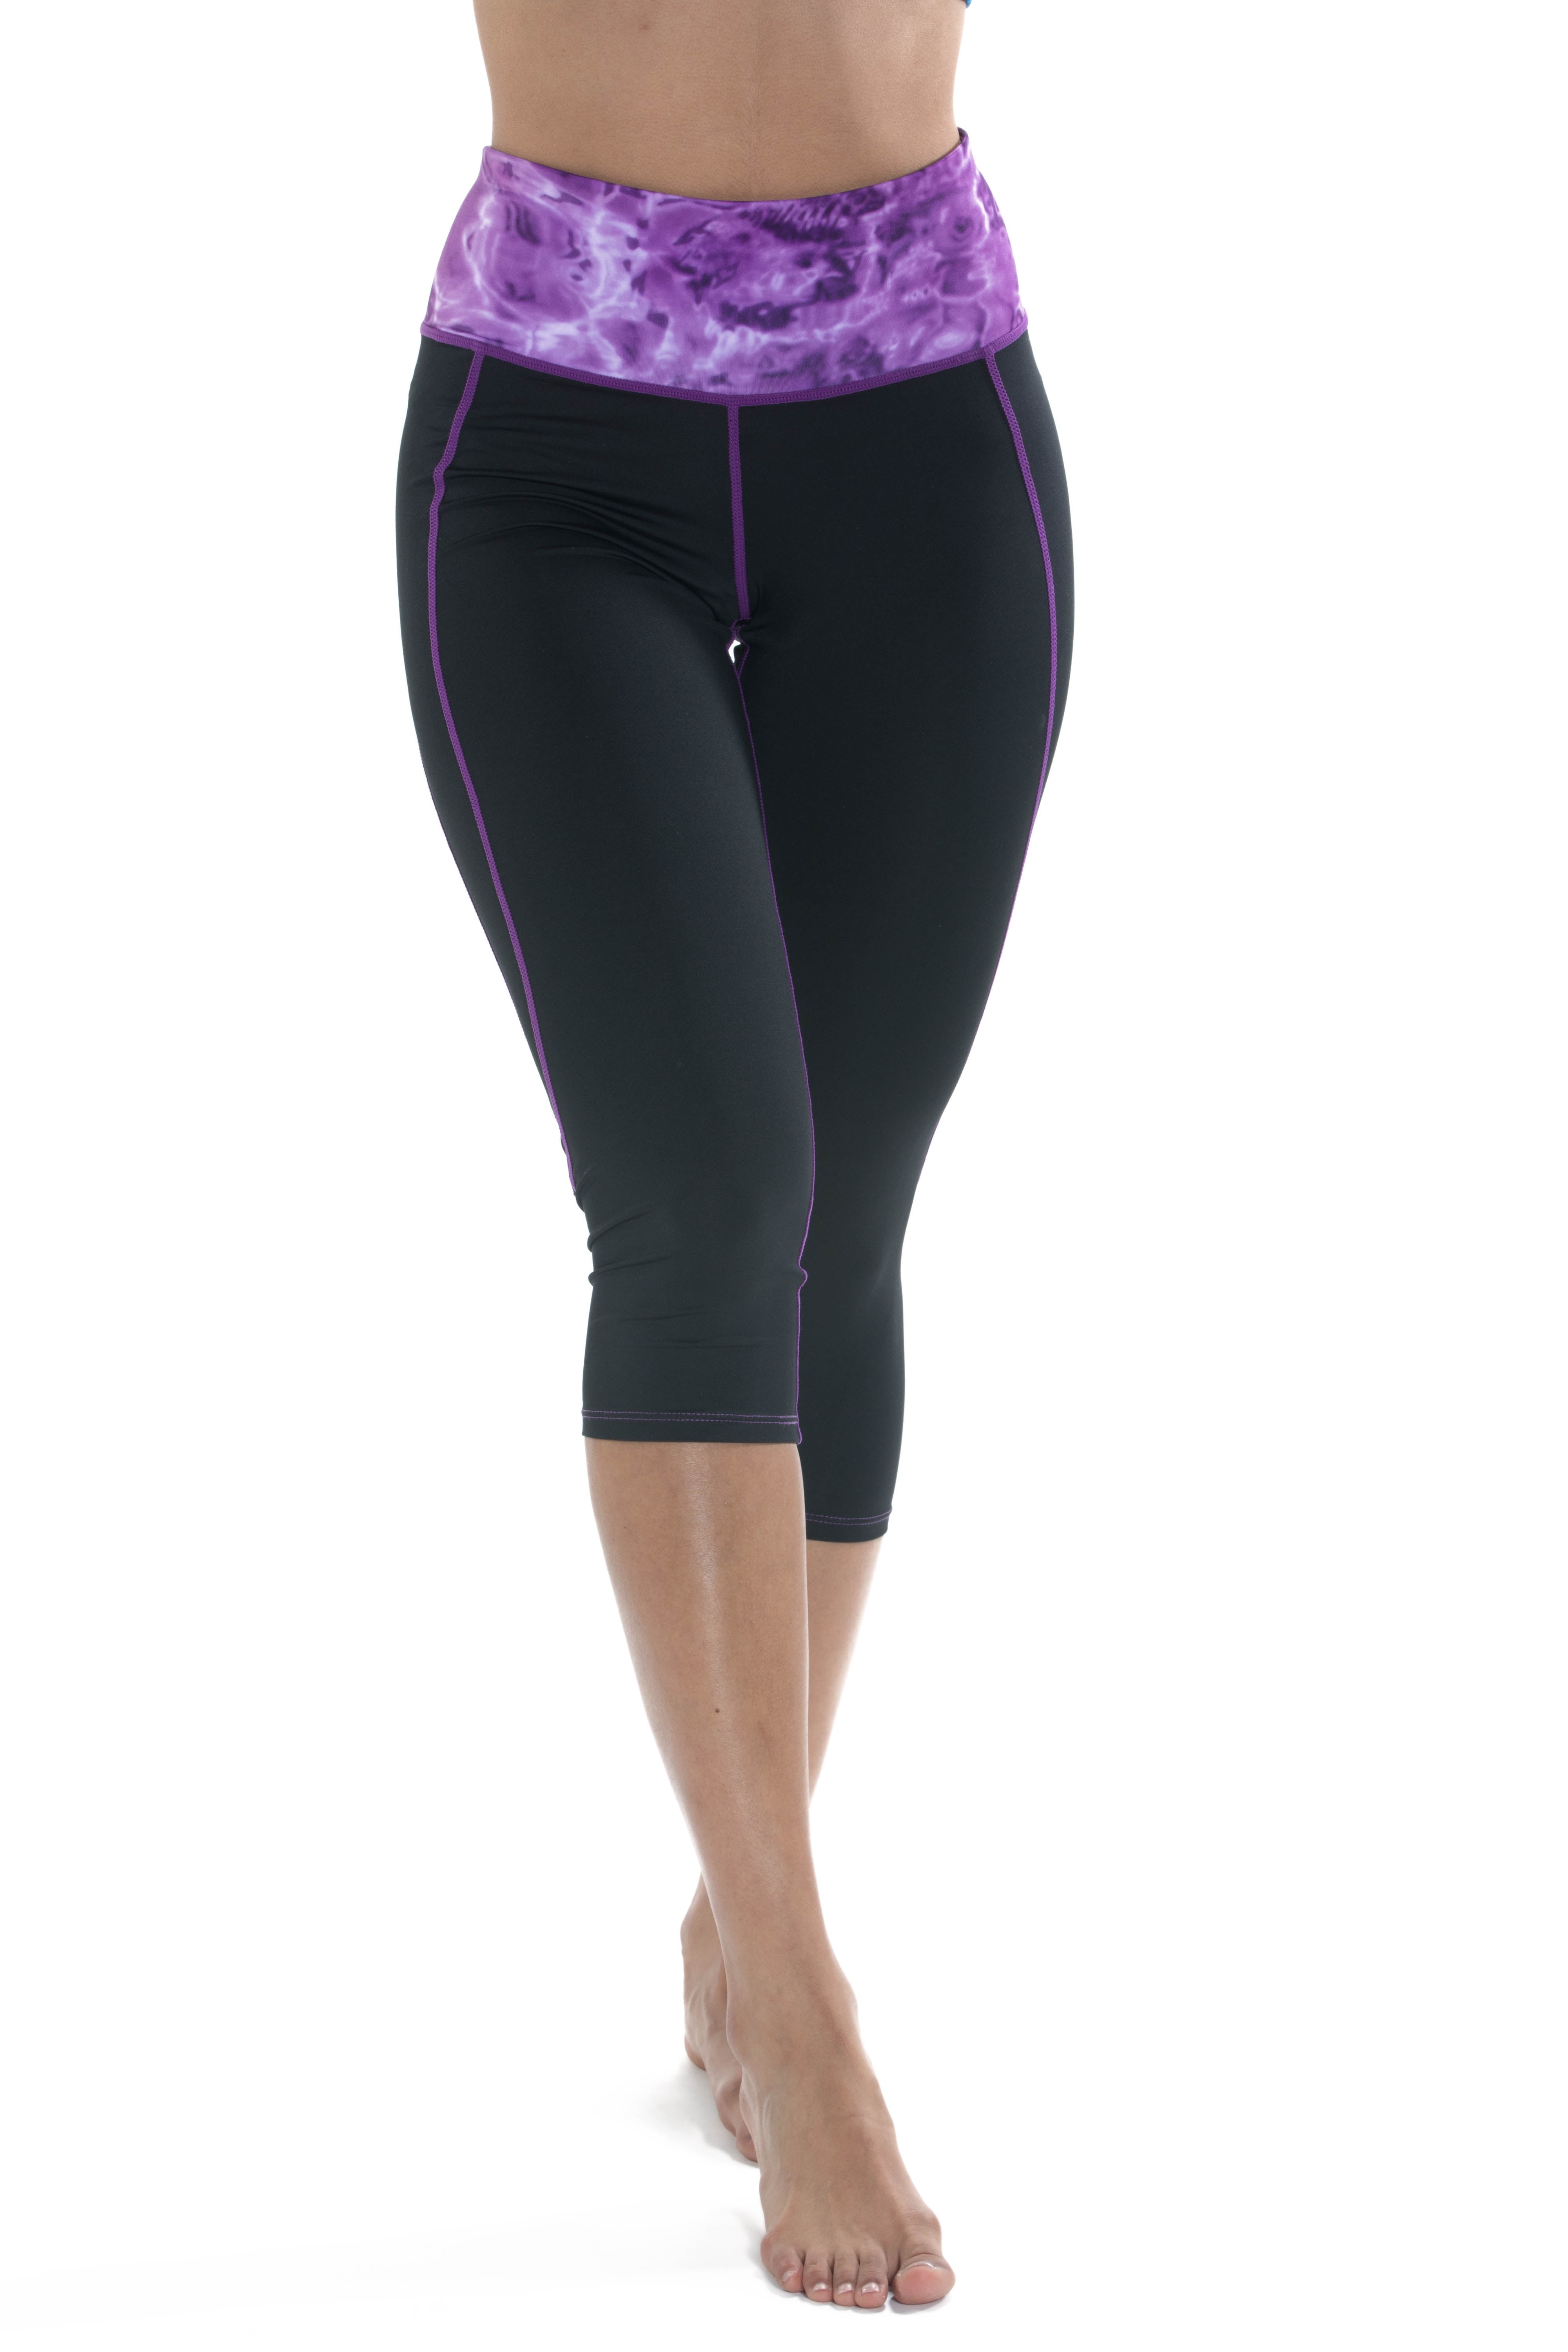 Aqua Design High Waisted Capri Leggings for Women: Black/Liquid Purple size  Small